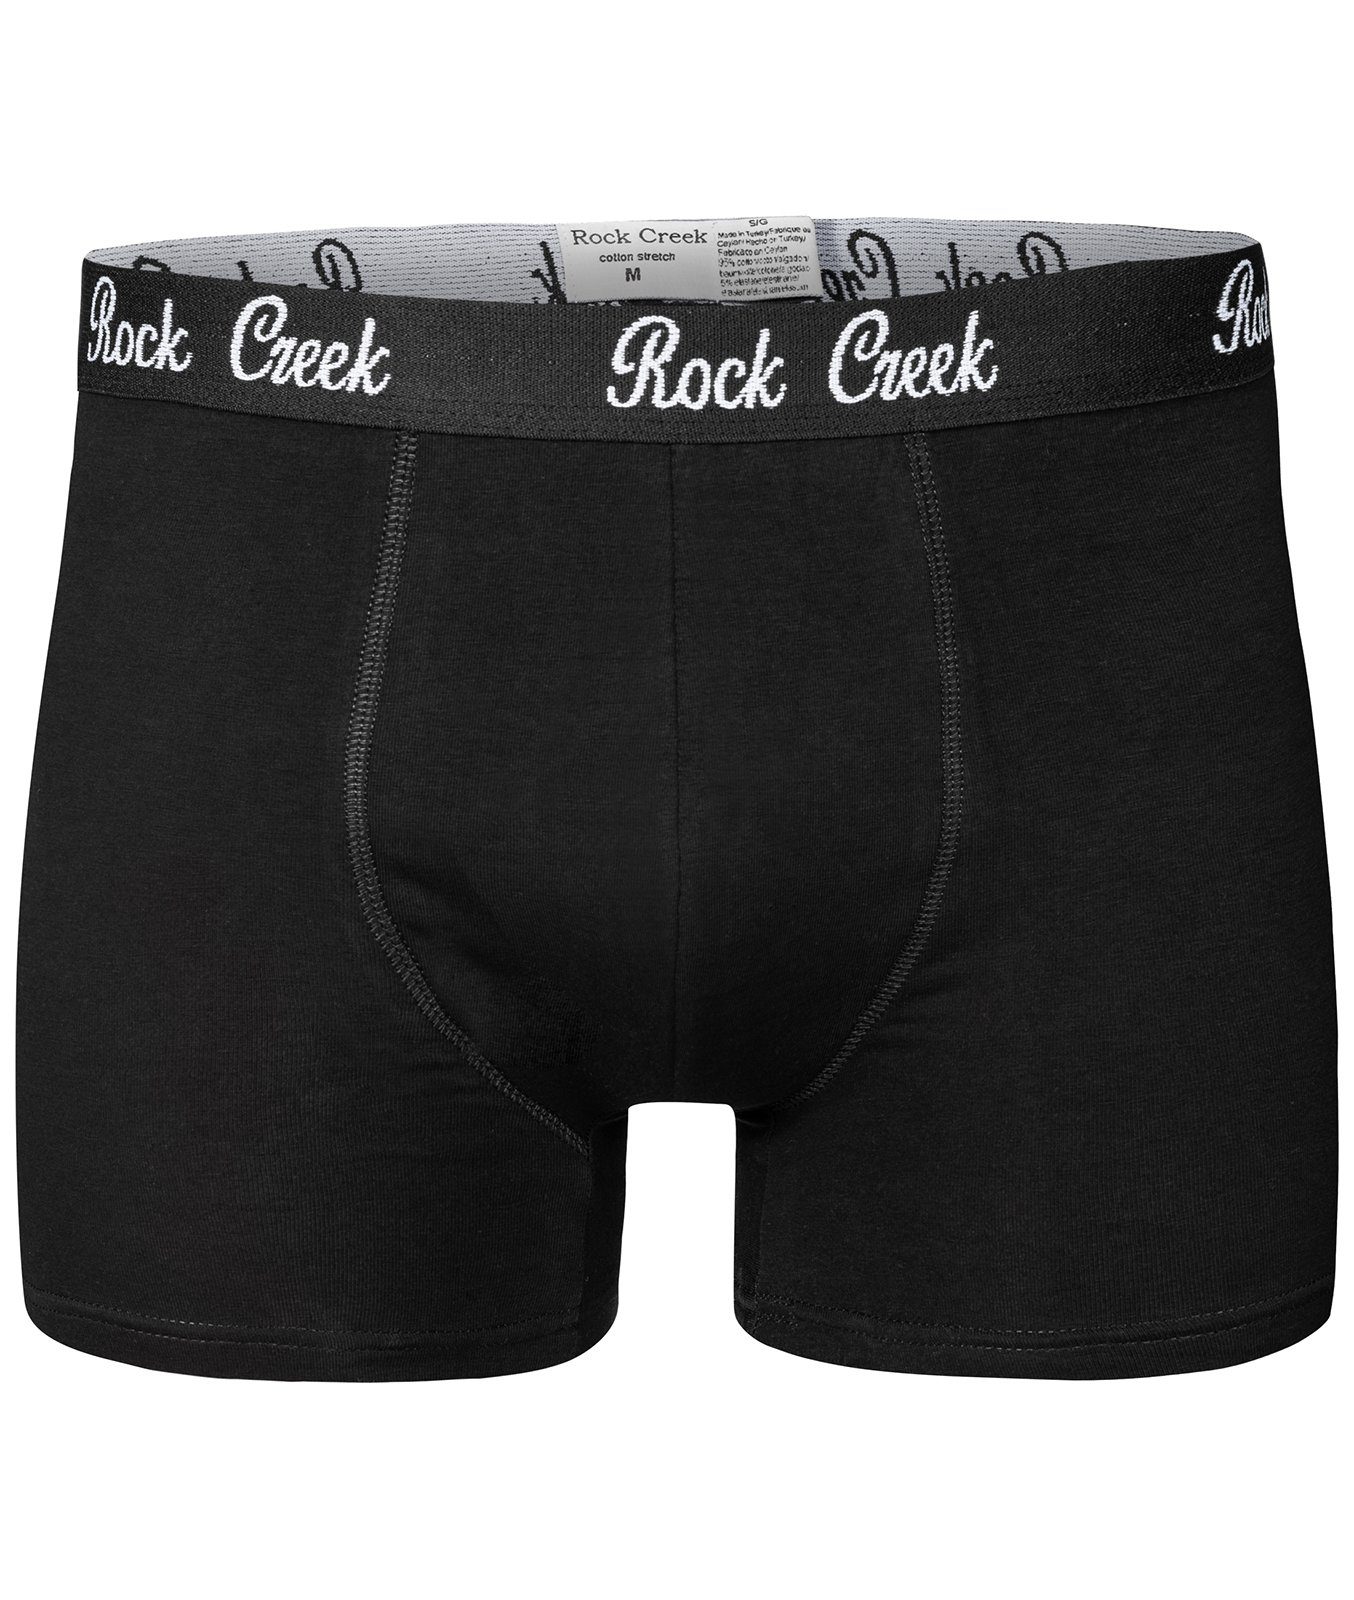 Rock (8er-Set) | | 8er Creek Boxershorts Herren grau blau H-218 Set | dunkelblau schwarz Boxershorts rot weiß | |